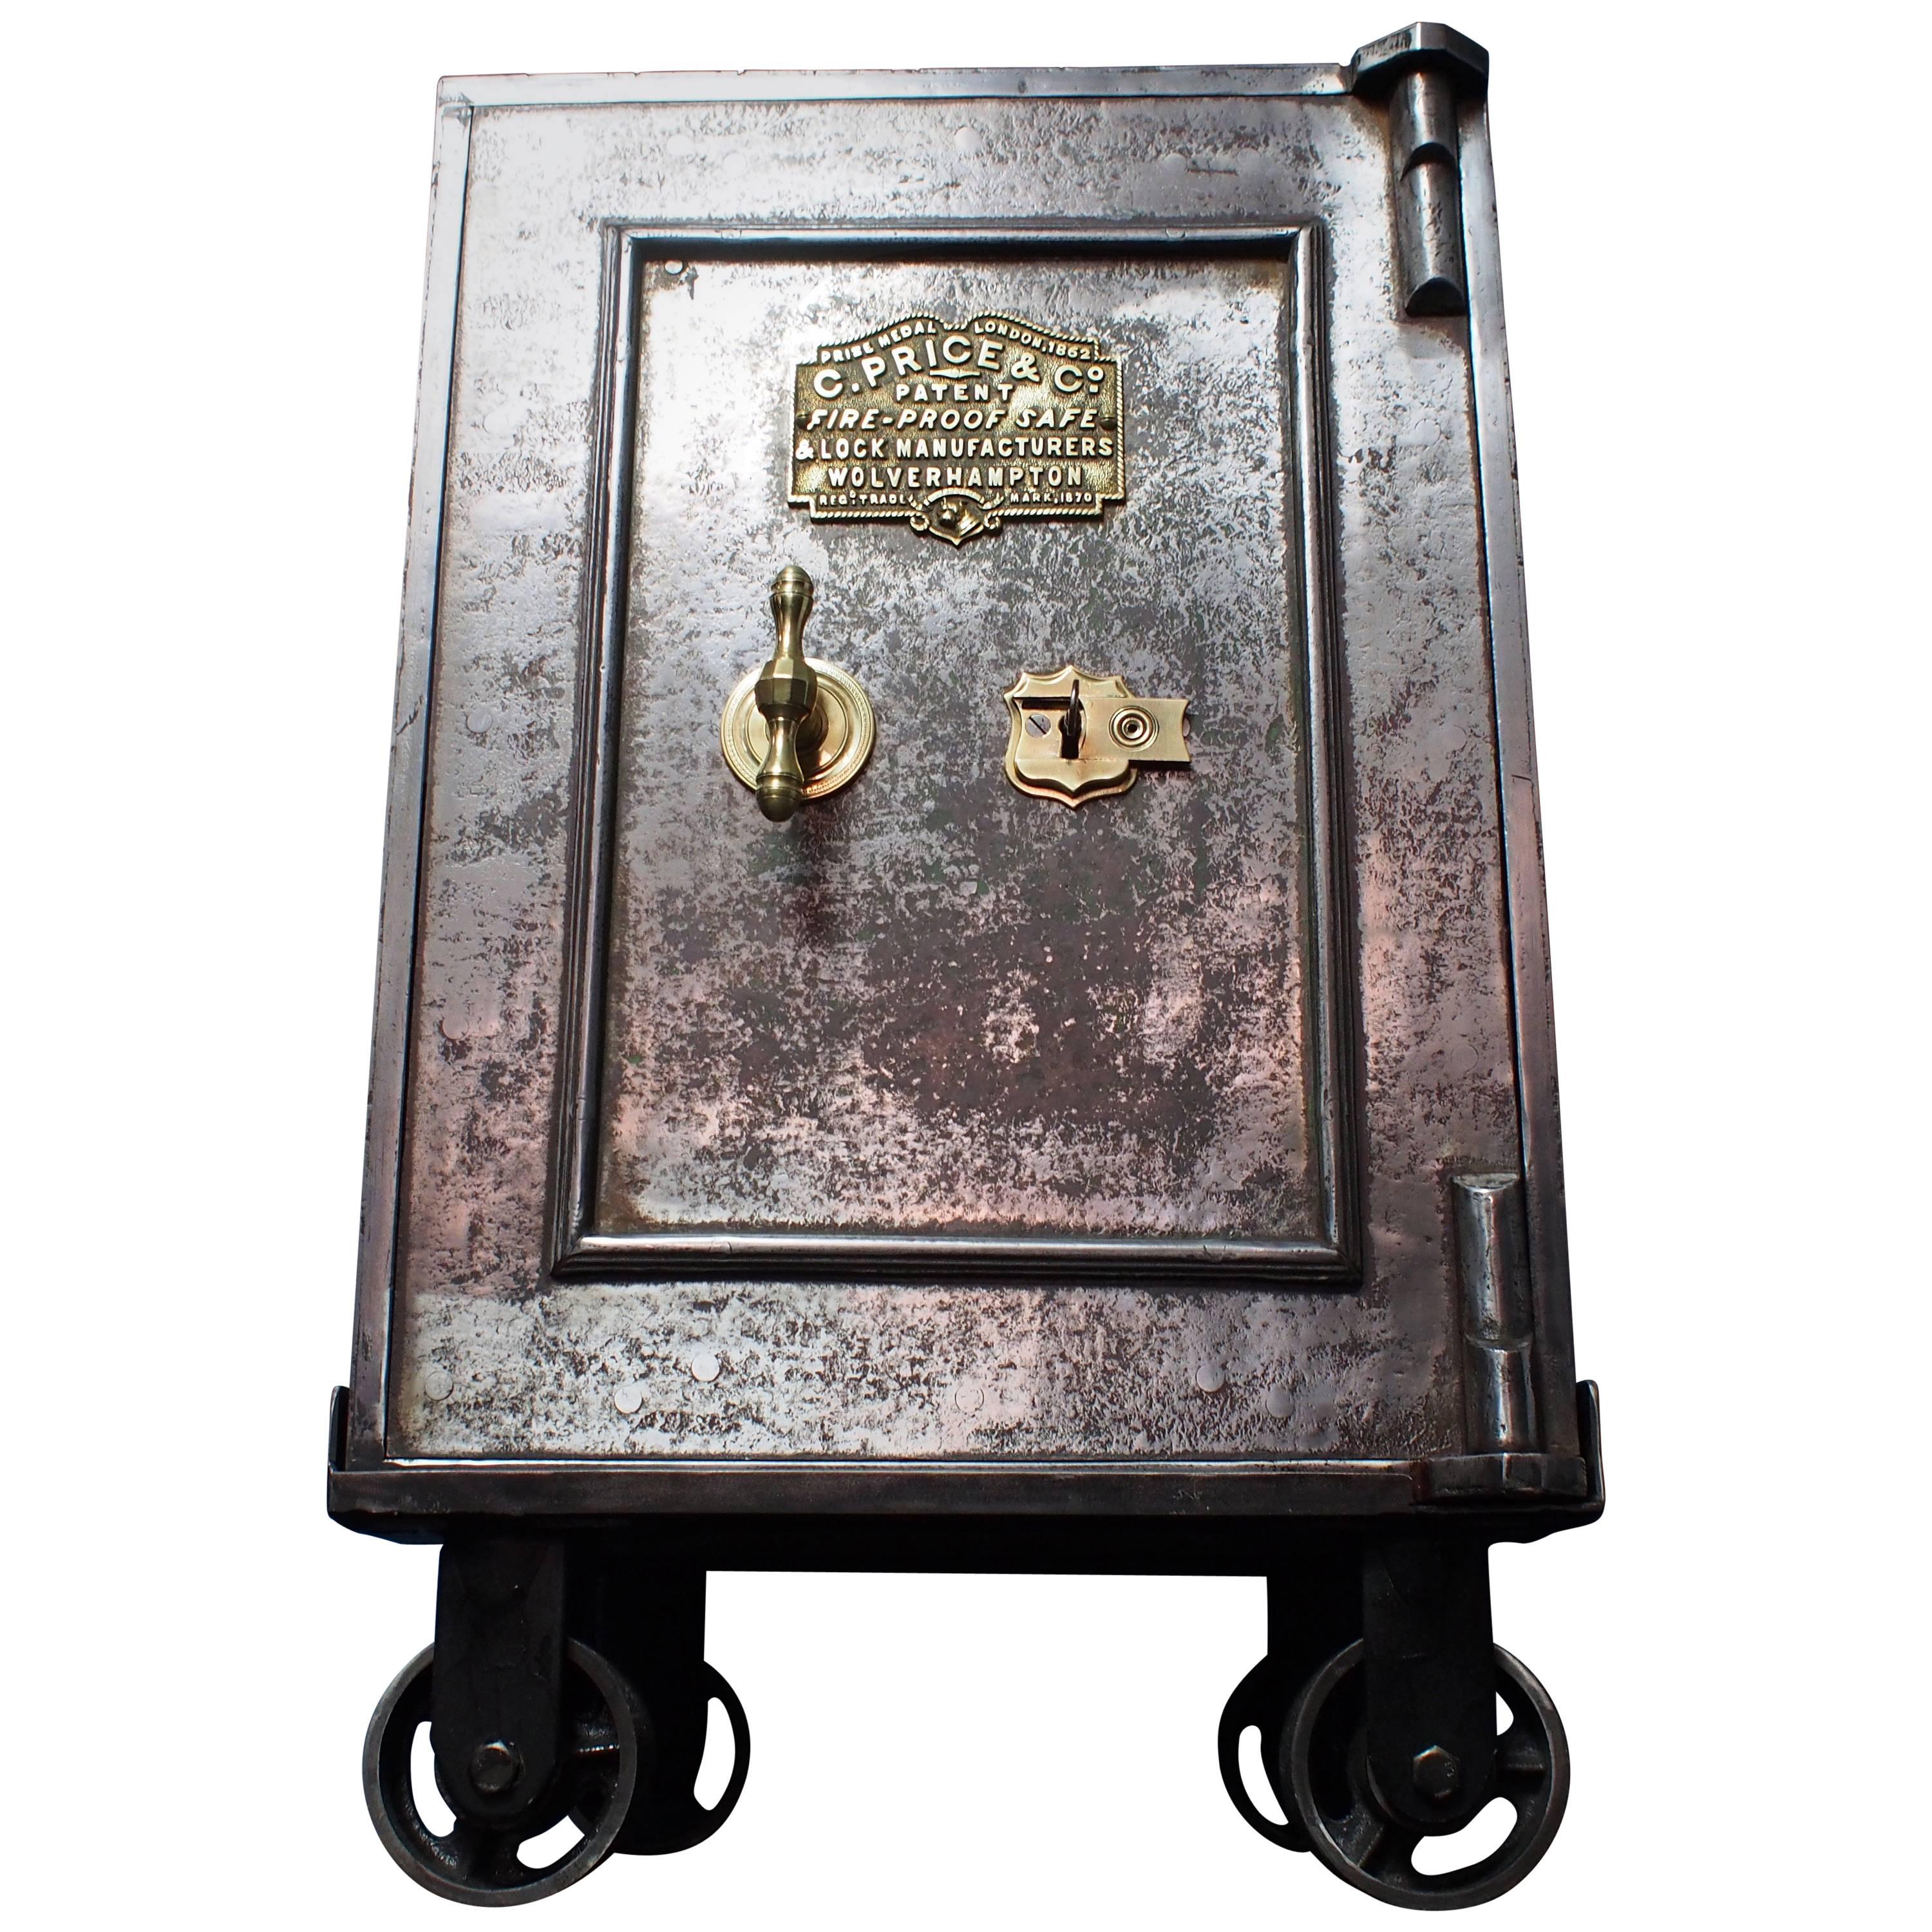 Fire-Proof Safe with Original Key Set on Bespoke Steel Trolley, 1800s